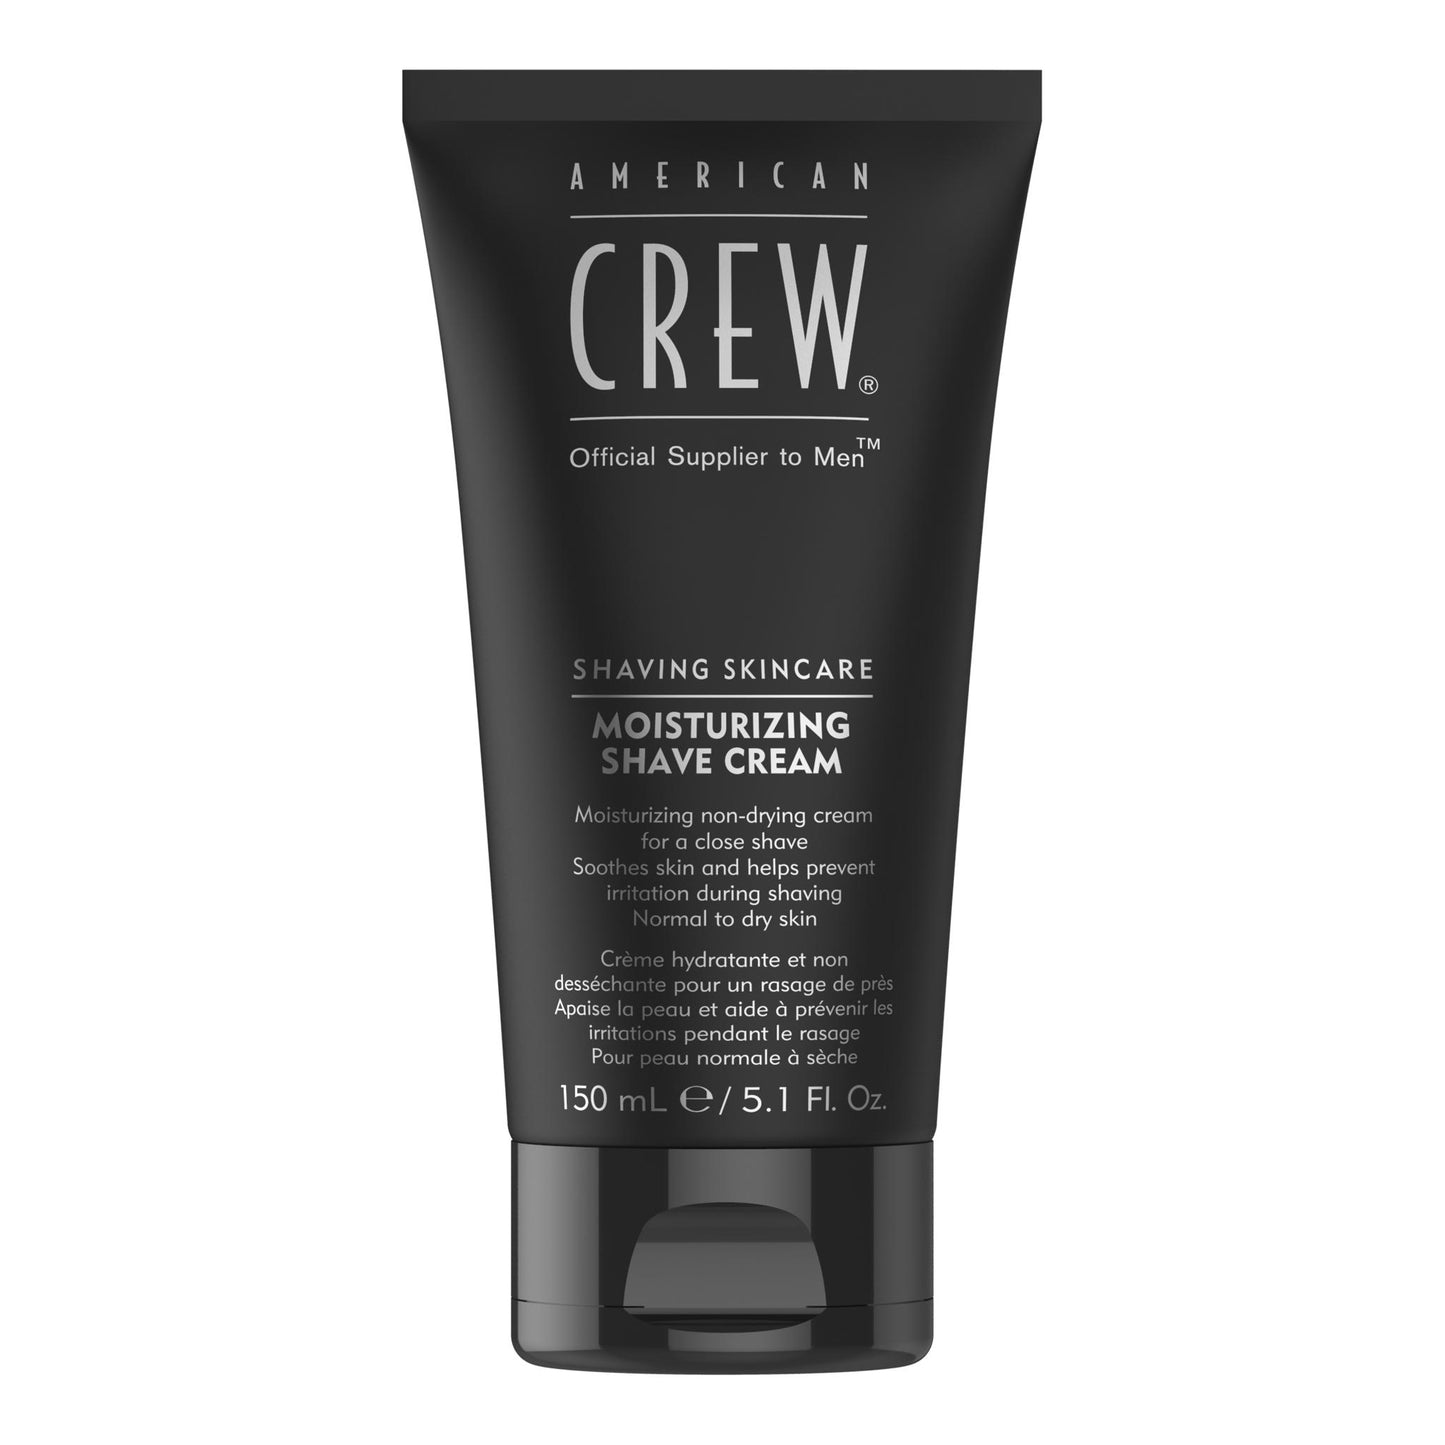 American Crew Shaving Skincare Moisturizing Shave Cream - Rasiercreme-The Man Himself